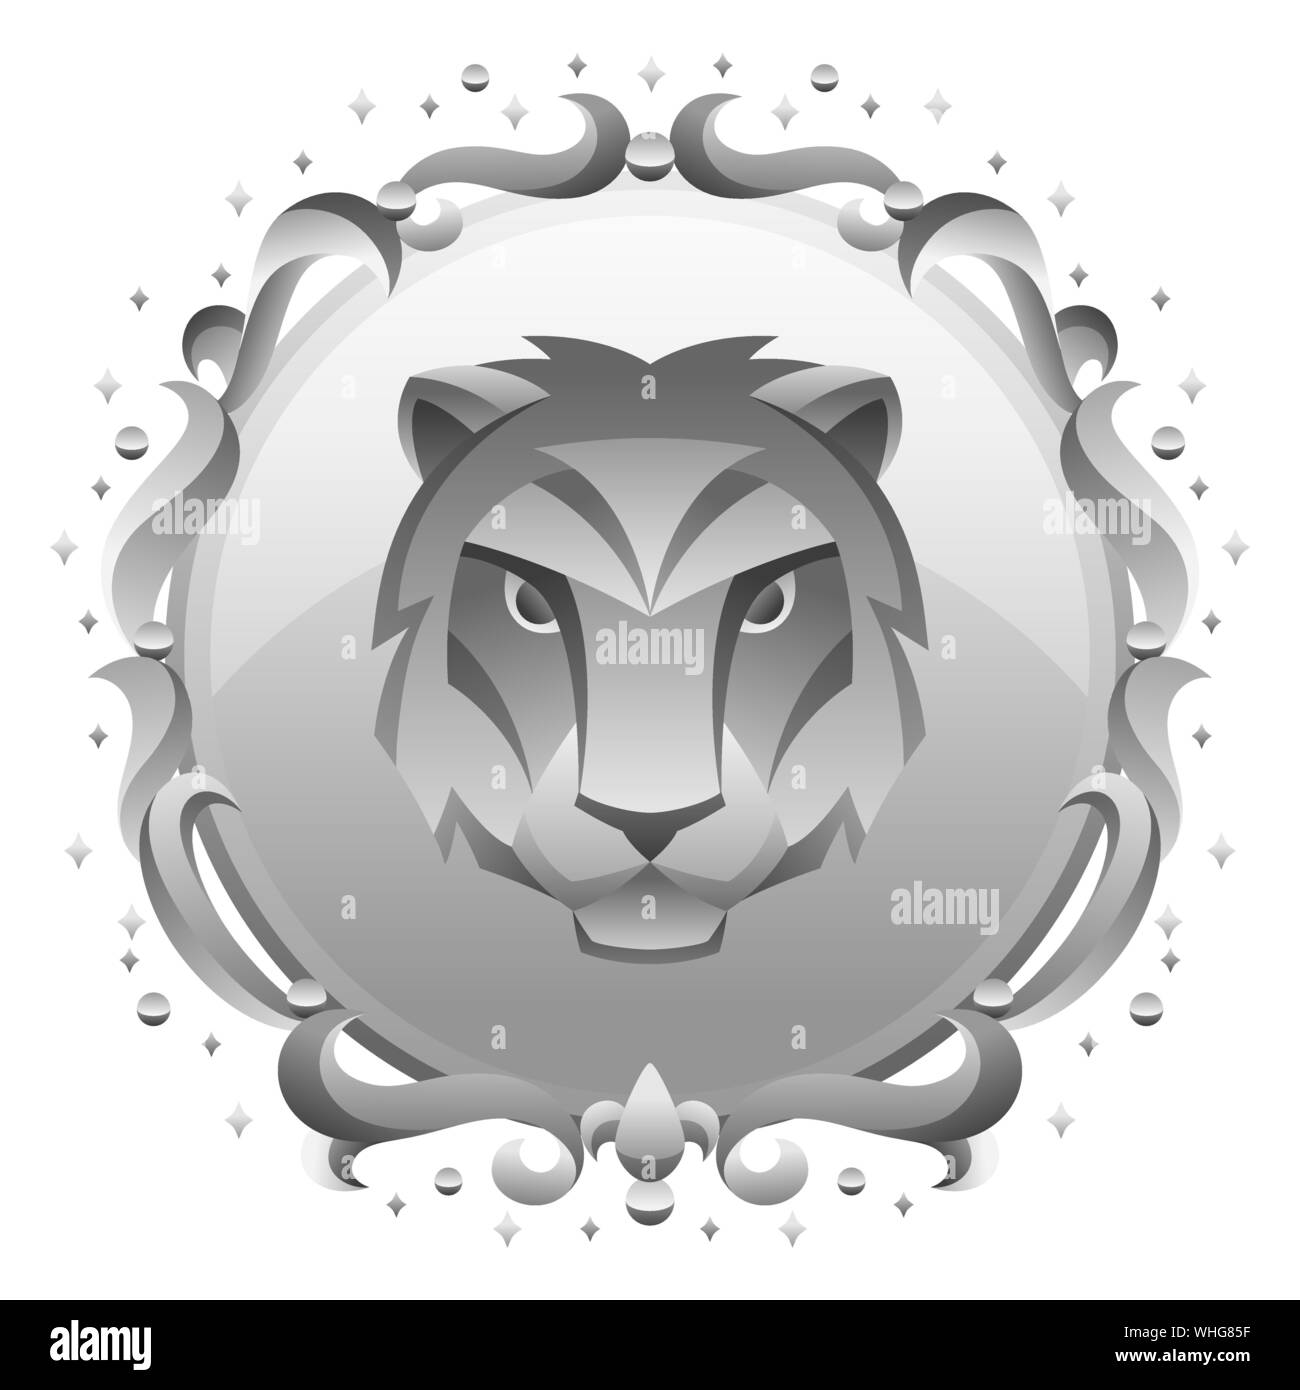 Leo zodiac sign with silver frame. Horoscope symbol. Stock Vector